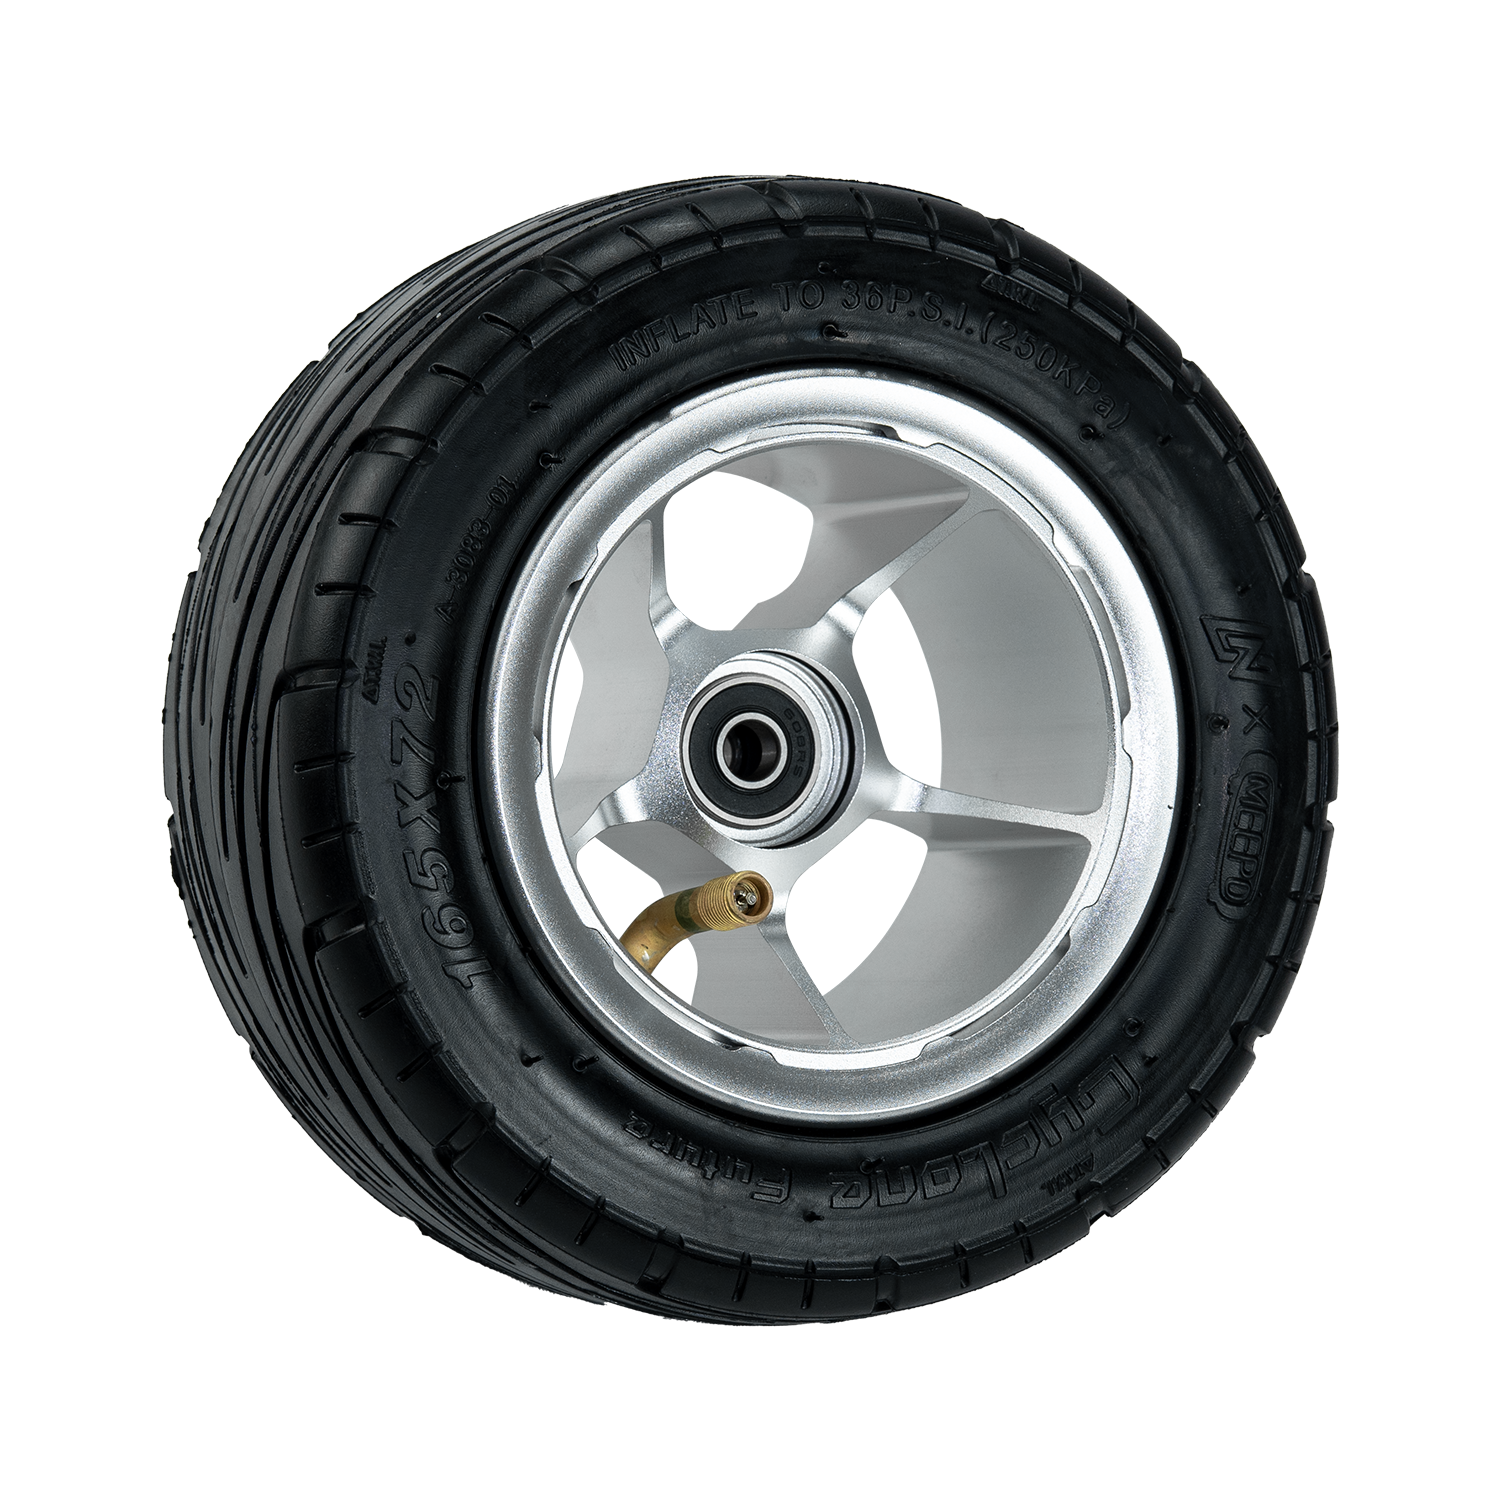 Acedeck®x Linnpower® NEXT Racing Wheel Set/Hub/ Slick Tire/ Inner tube 160*70mm - Nyx Z1, Nyx Z3, Ares X1, Nomad N1, Nomad N3